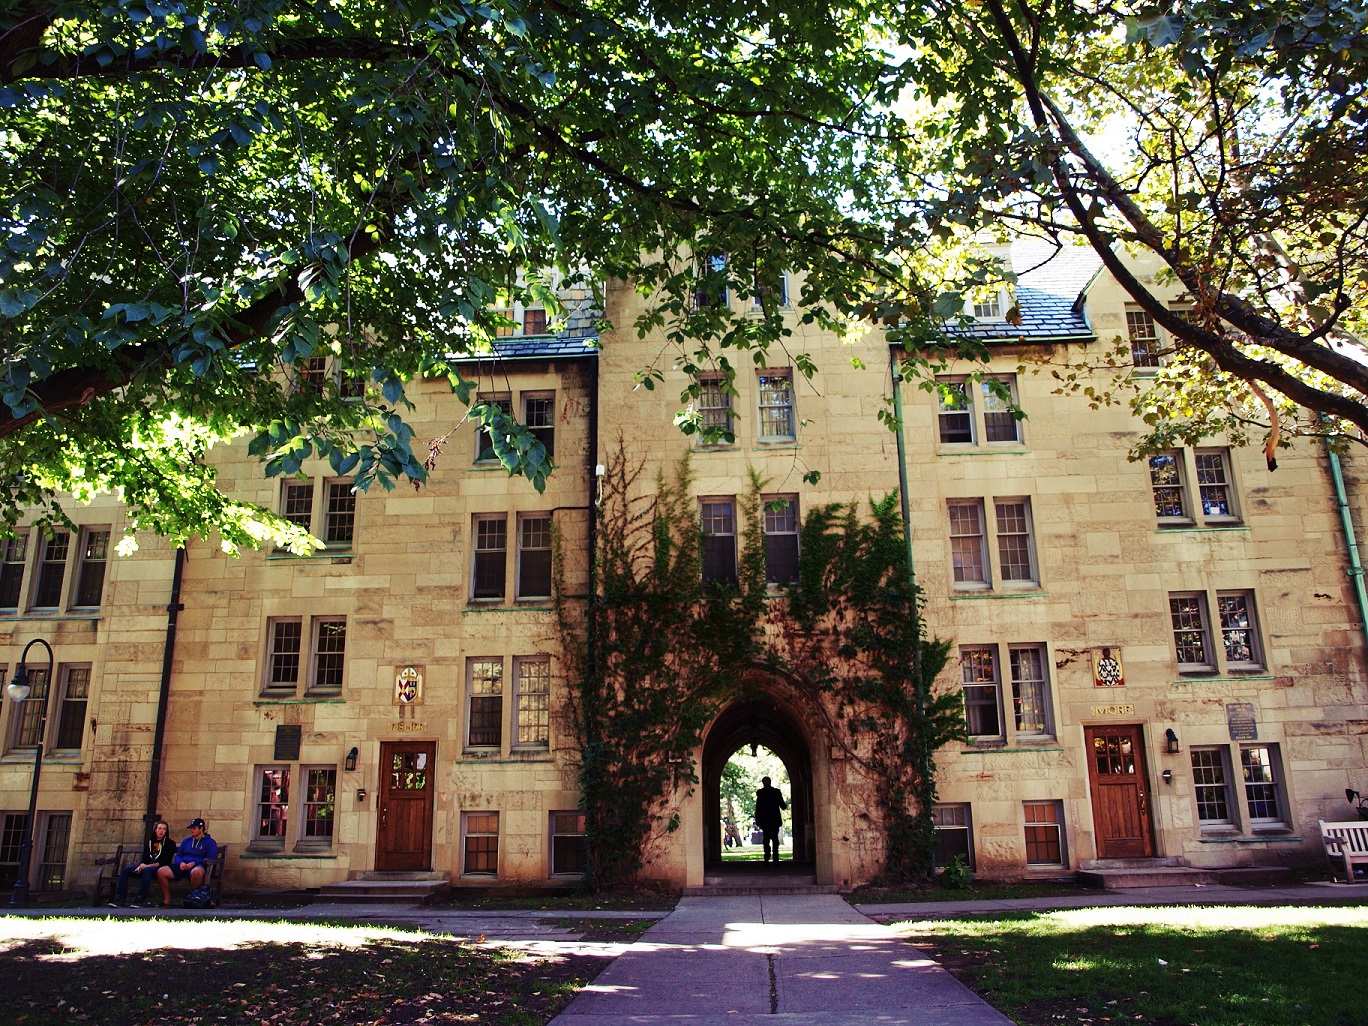 St. Michael’s College (University of Toronto)